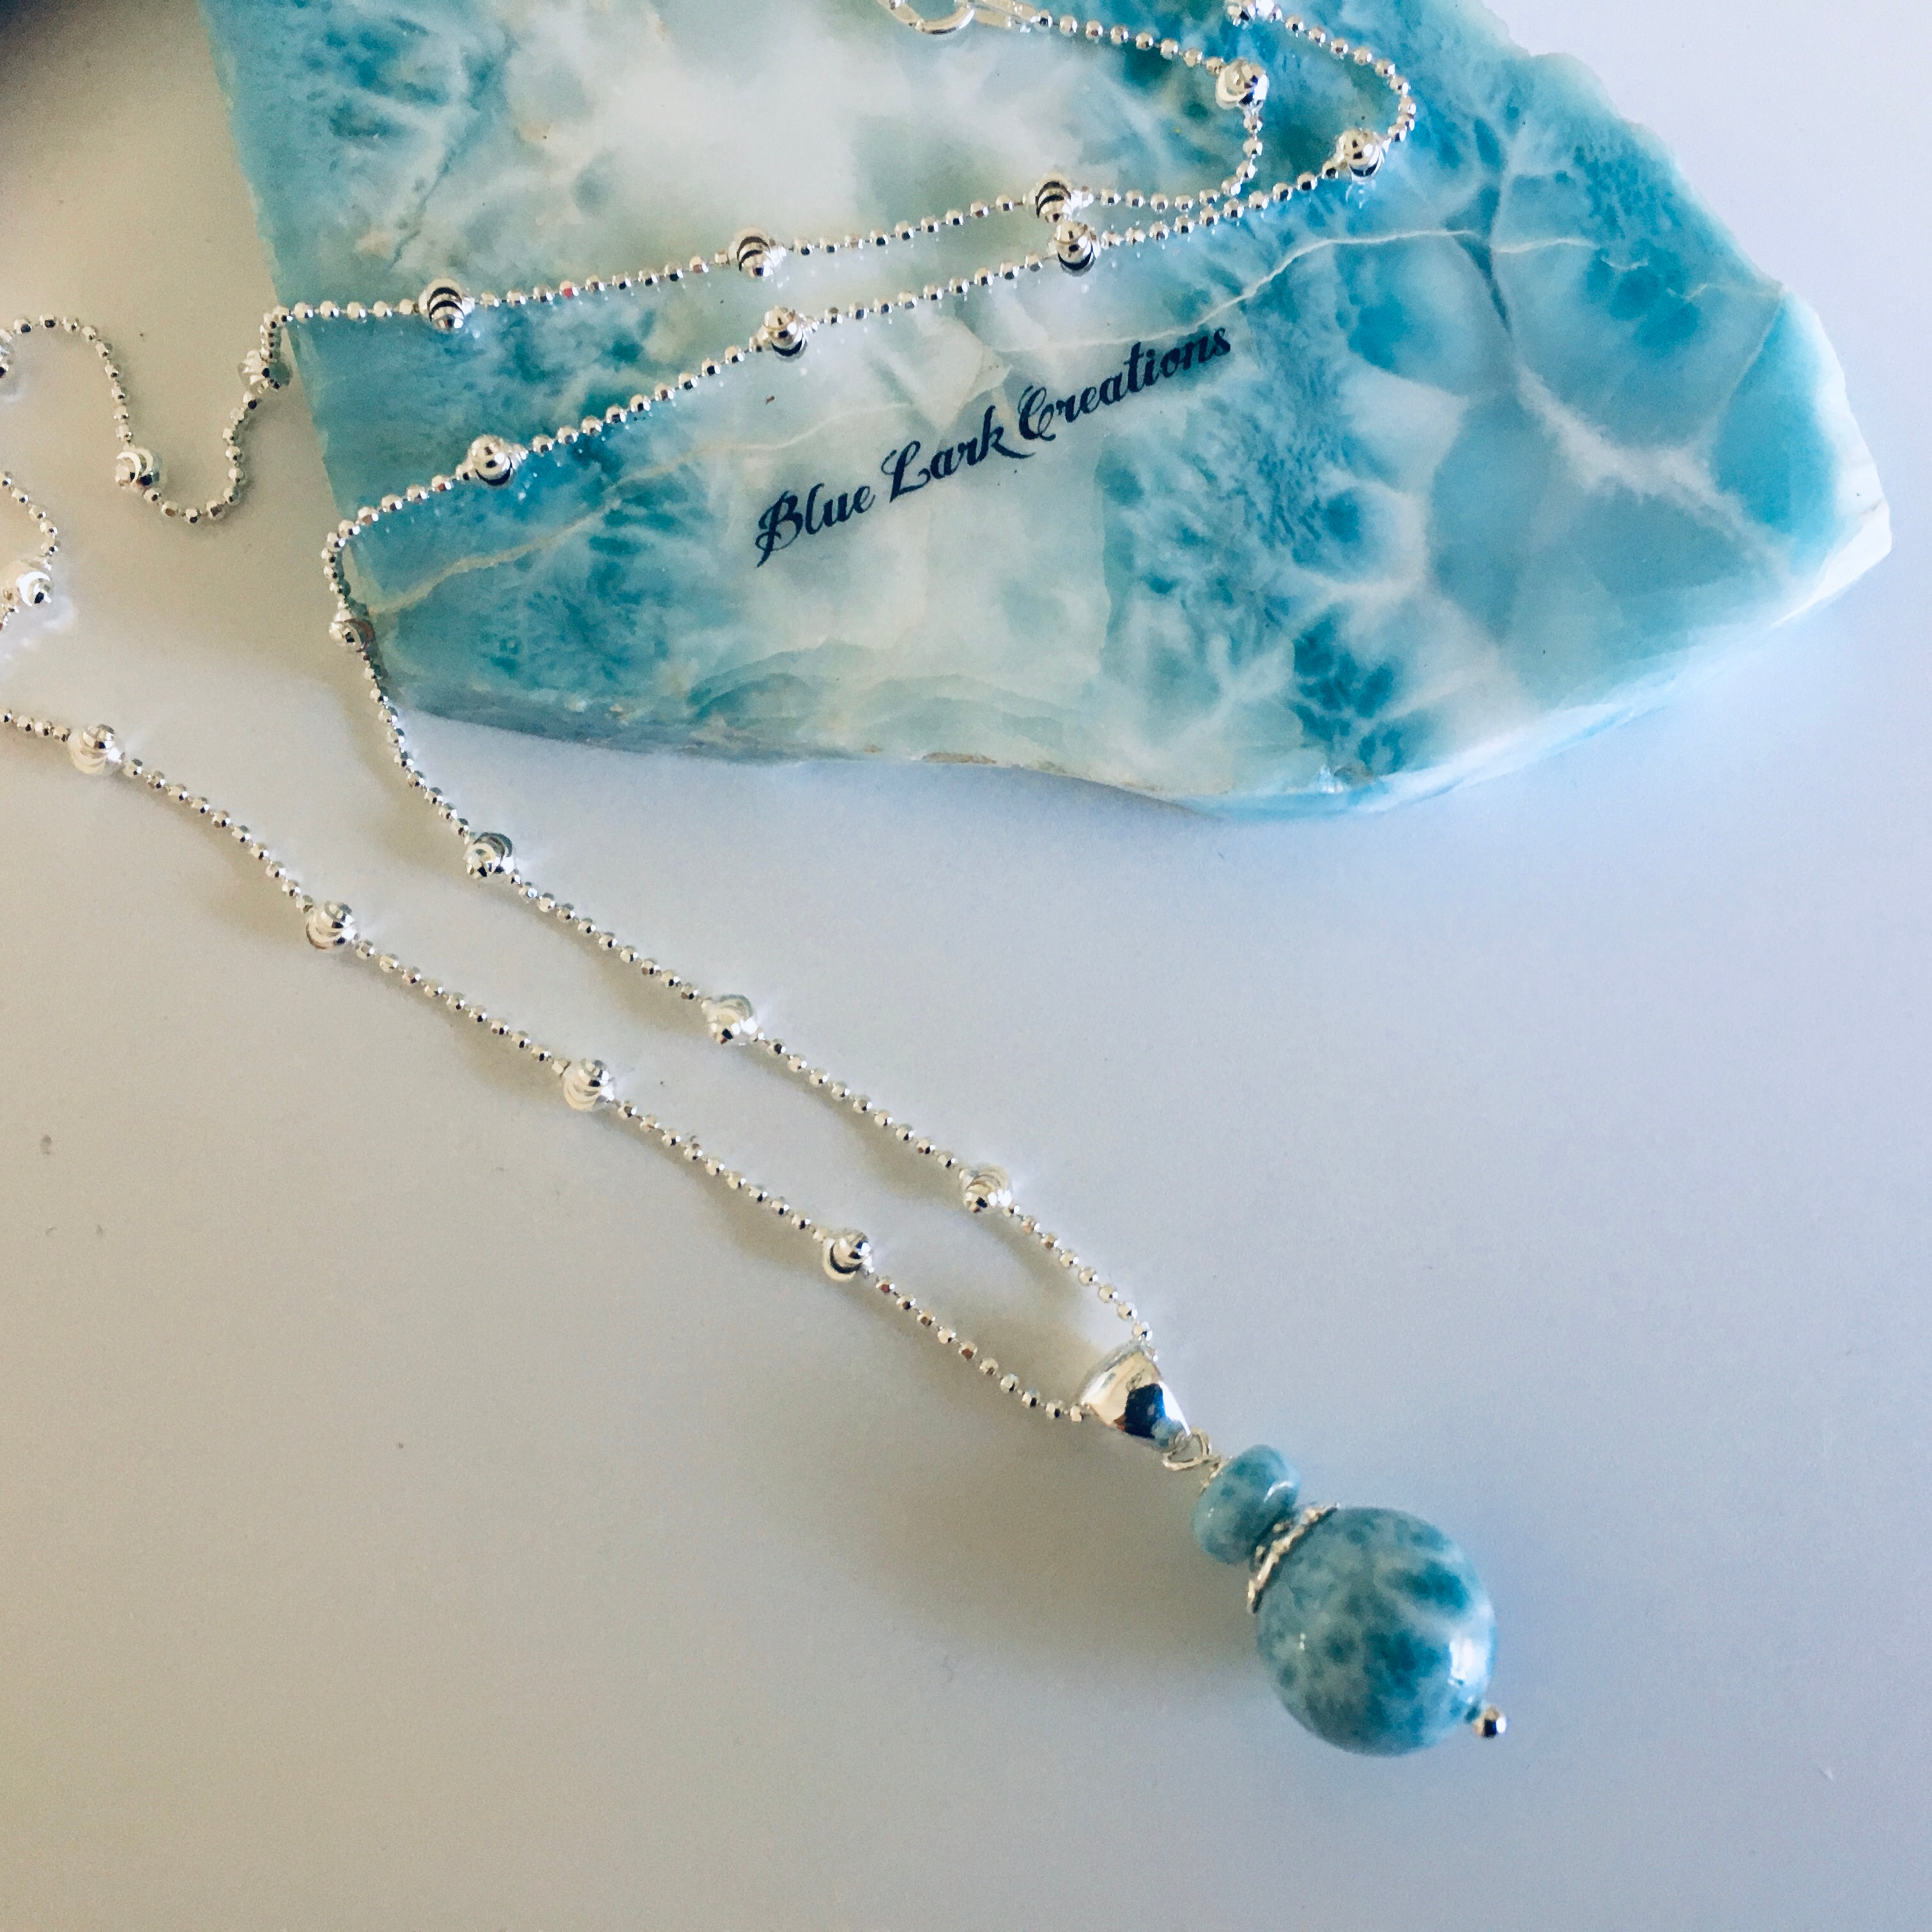 Oval Light Blue Sapphire Pendant Necklace - Turgeon Raine